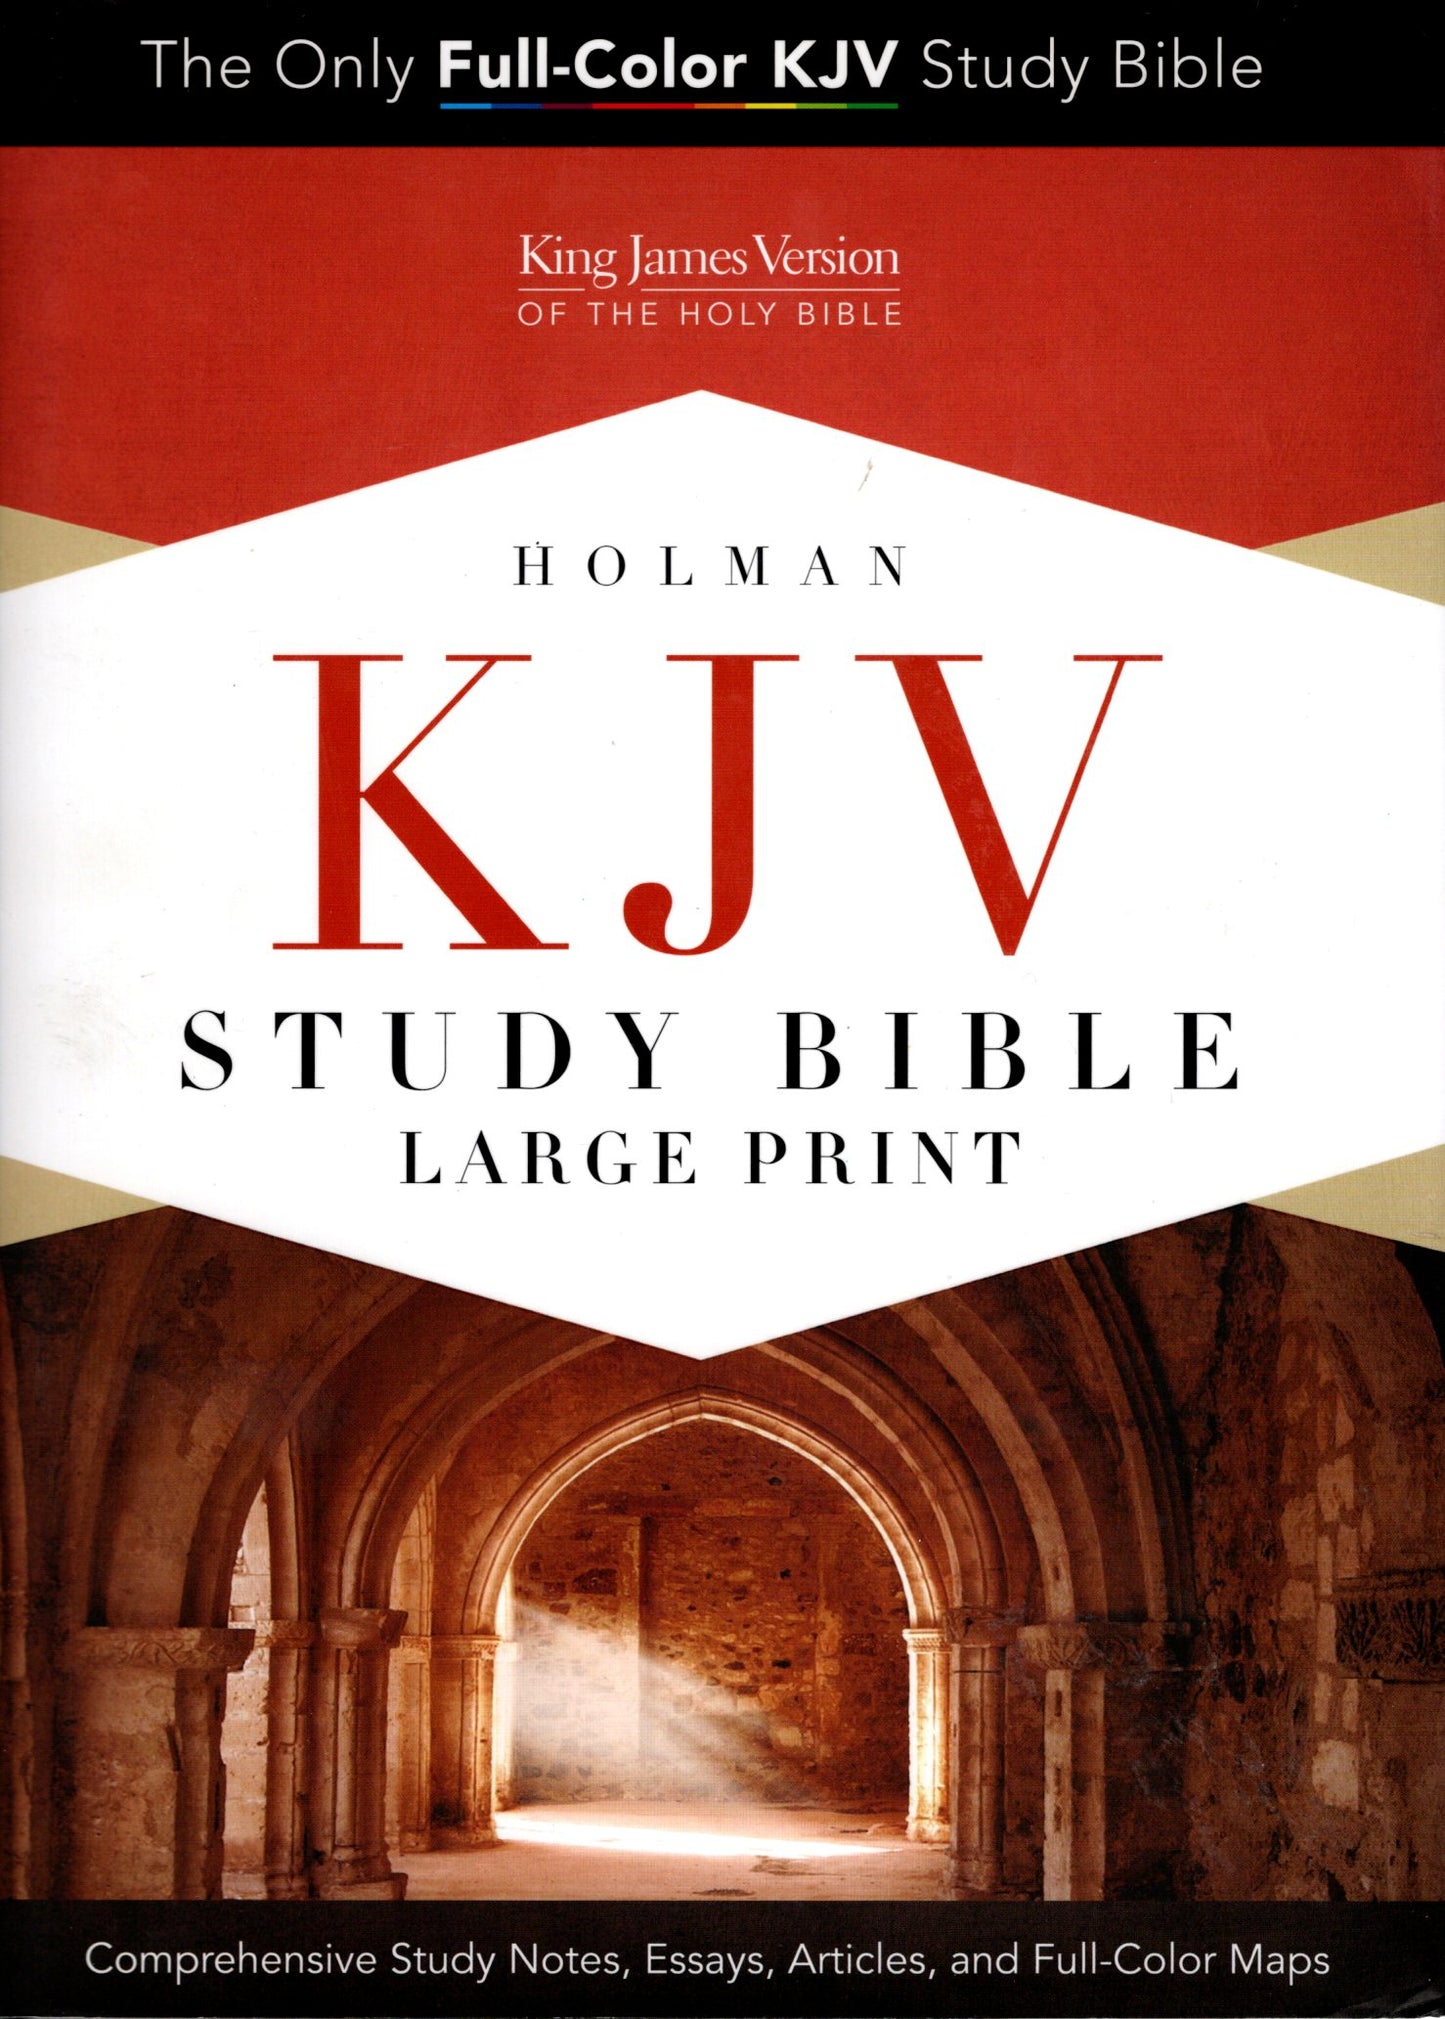 Holman KJV Study Bible, Large Print - "The Only Full-Color KJV Study Bible" - Hardcover w/Dust Jacket